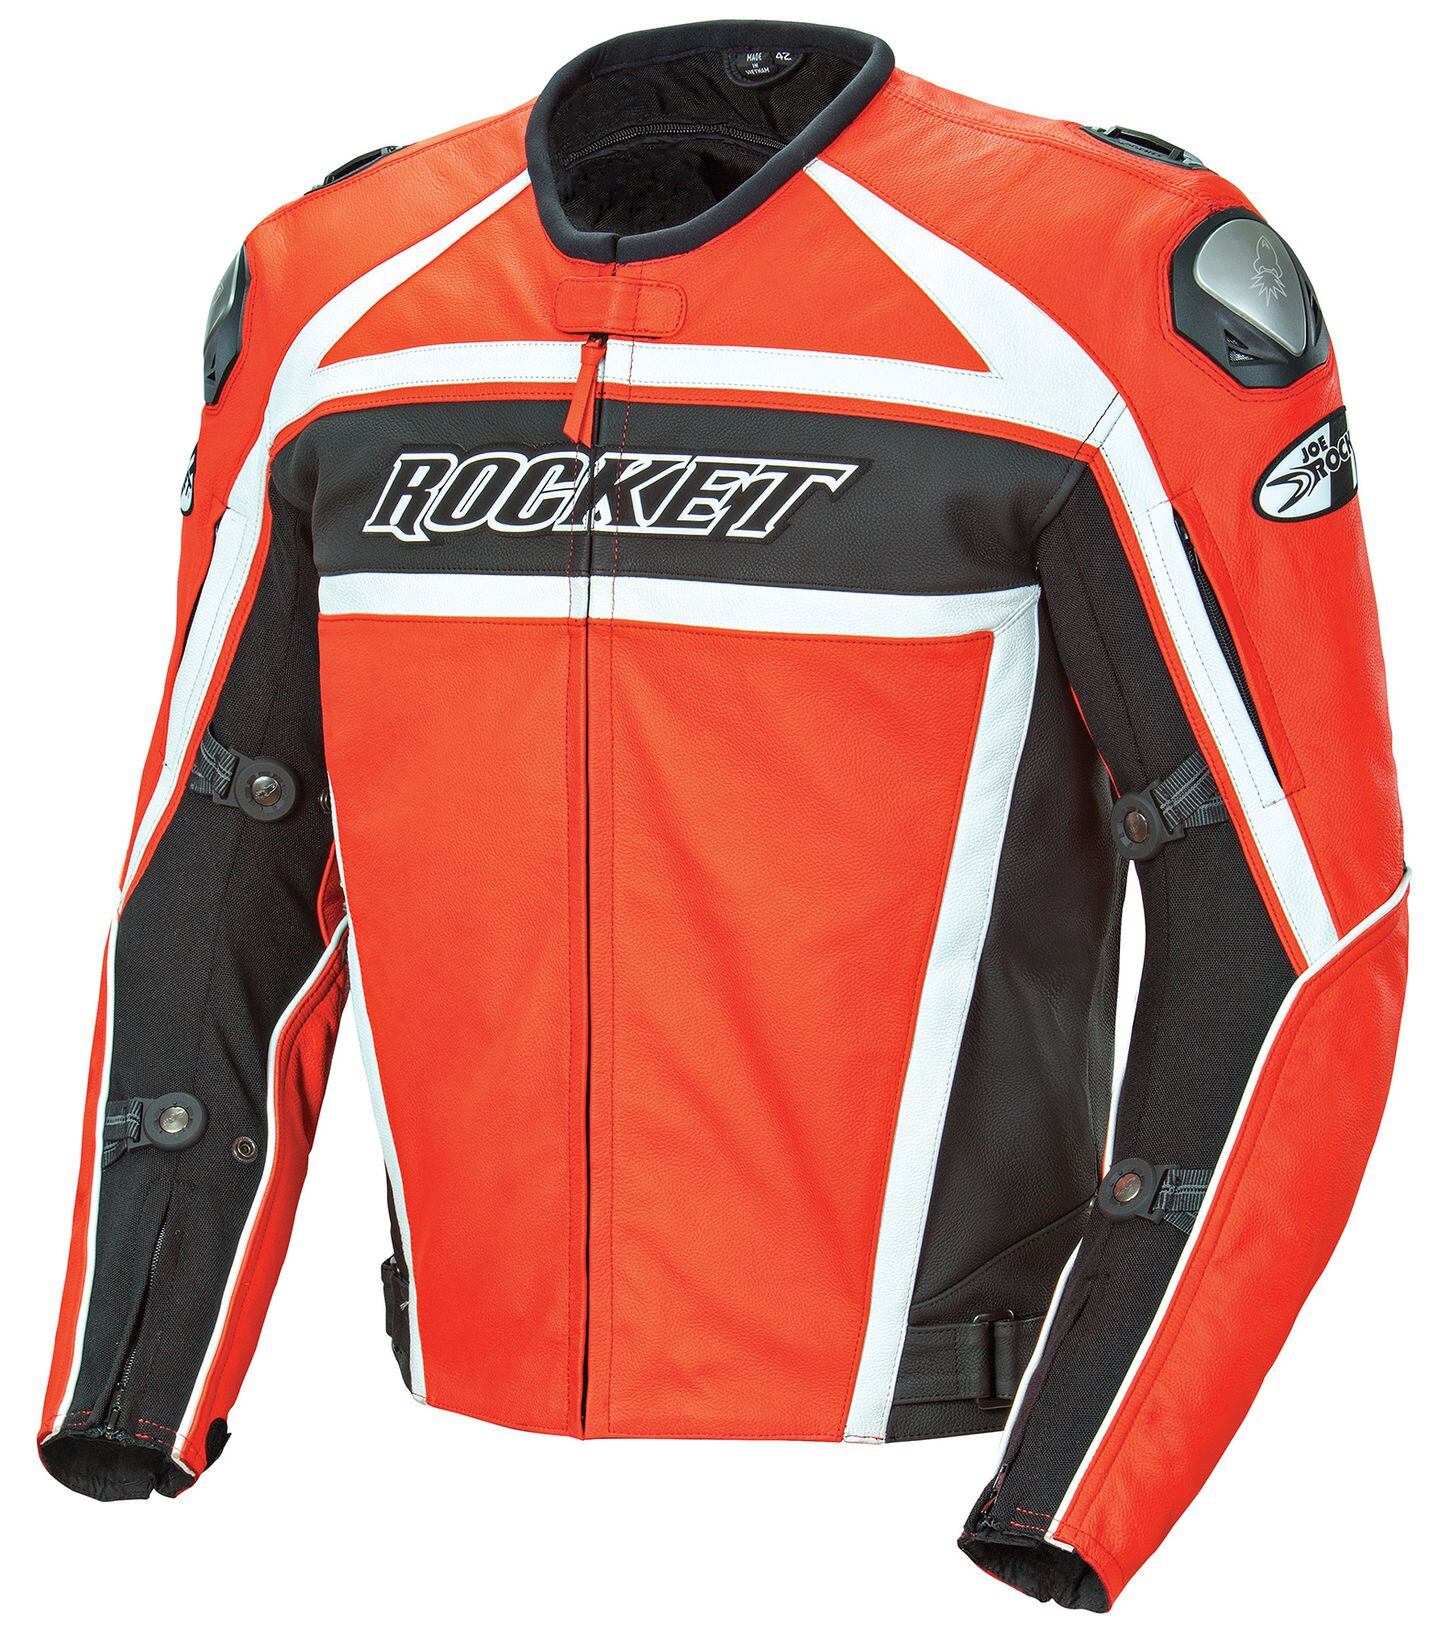 Joe Rocket Speedmaster Summer Leather Jacket Review - Motorcycle Gear Hub